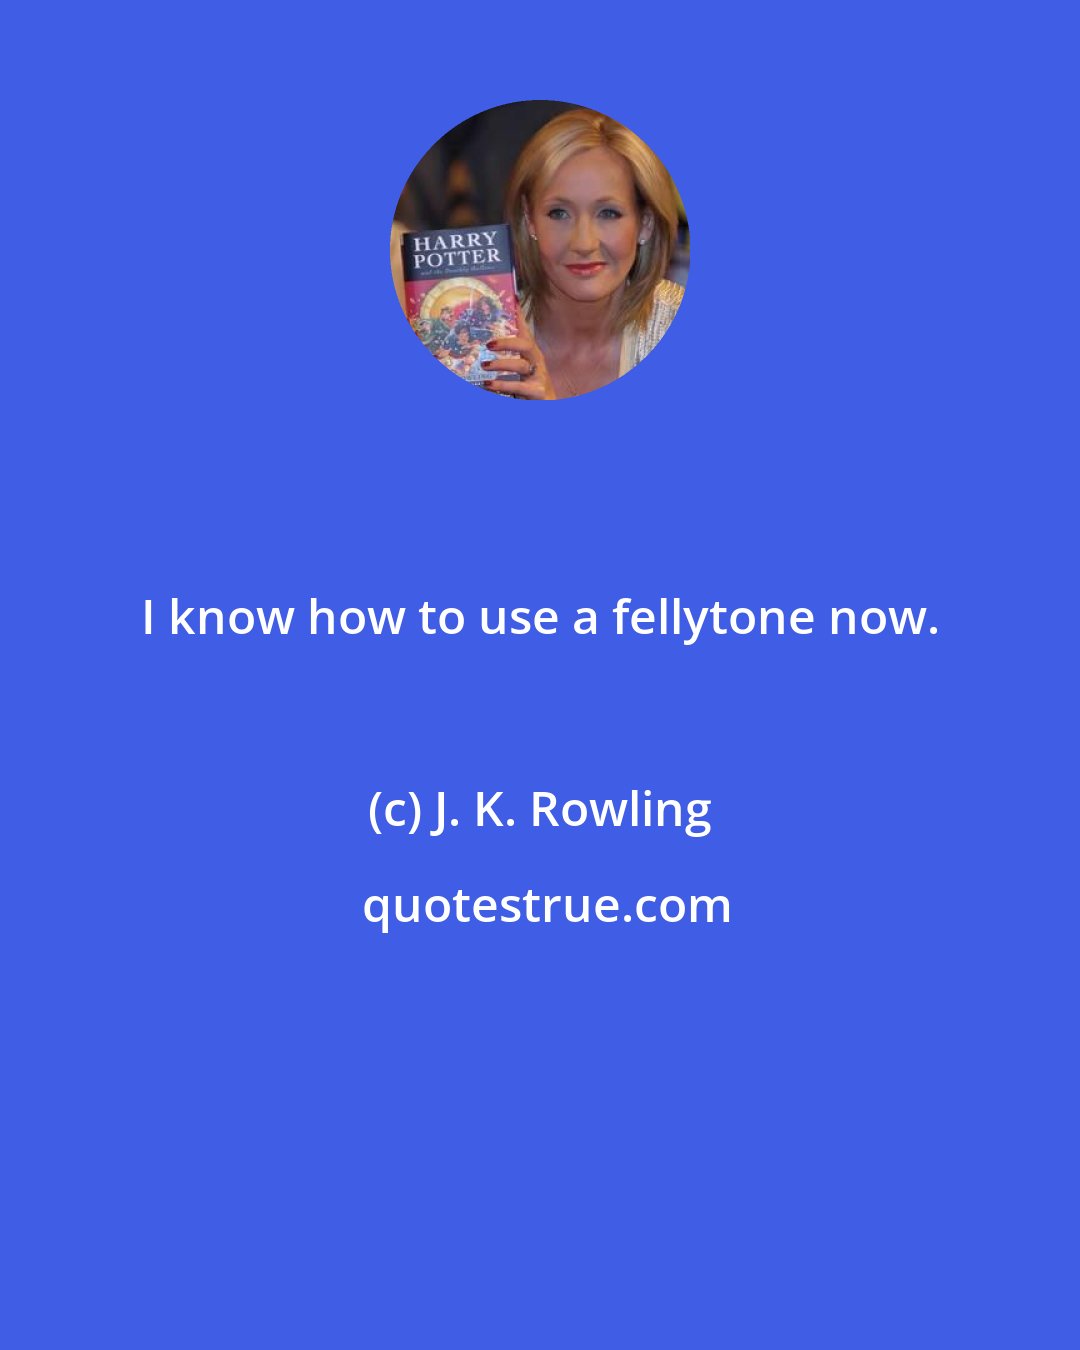 J. K. Rowling: I know how to use a fellytone now.